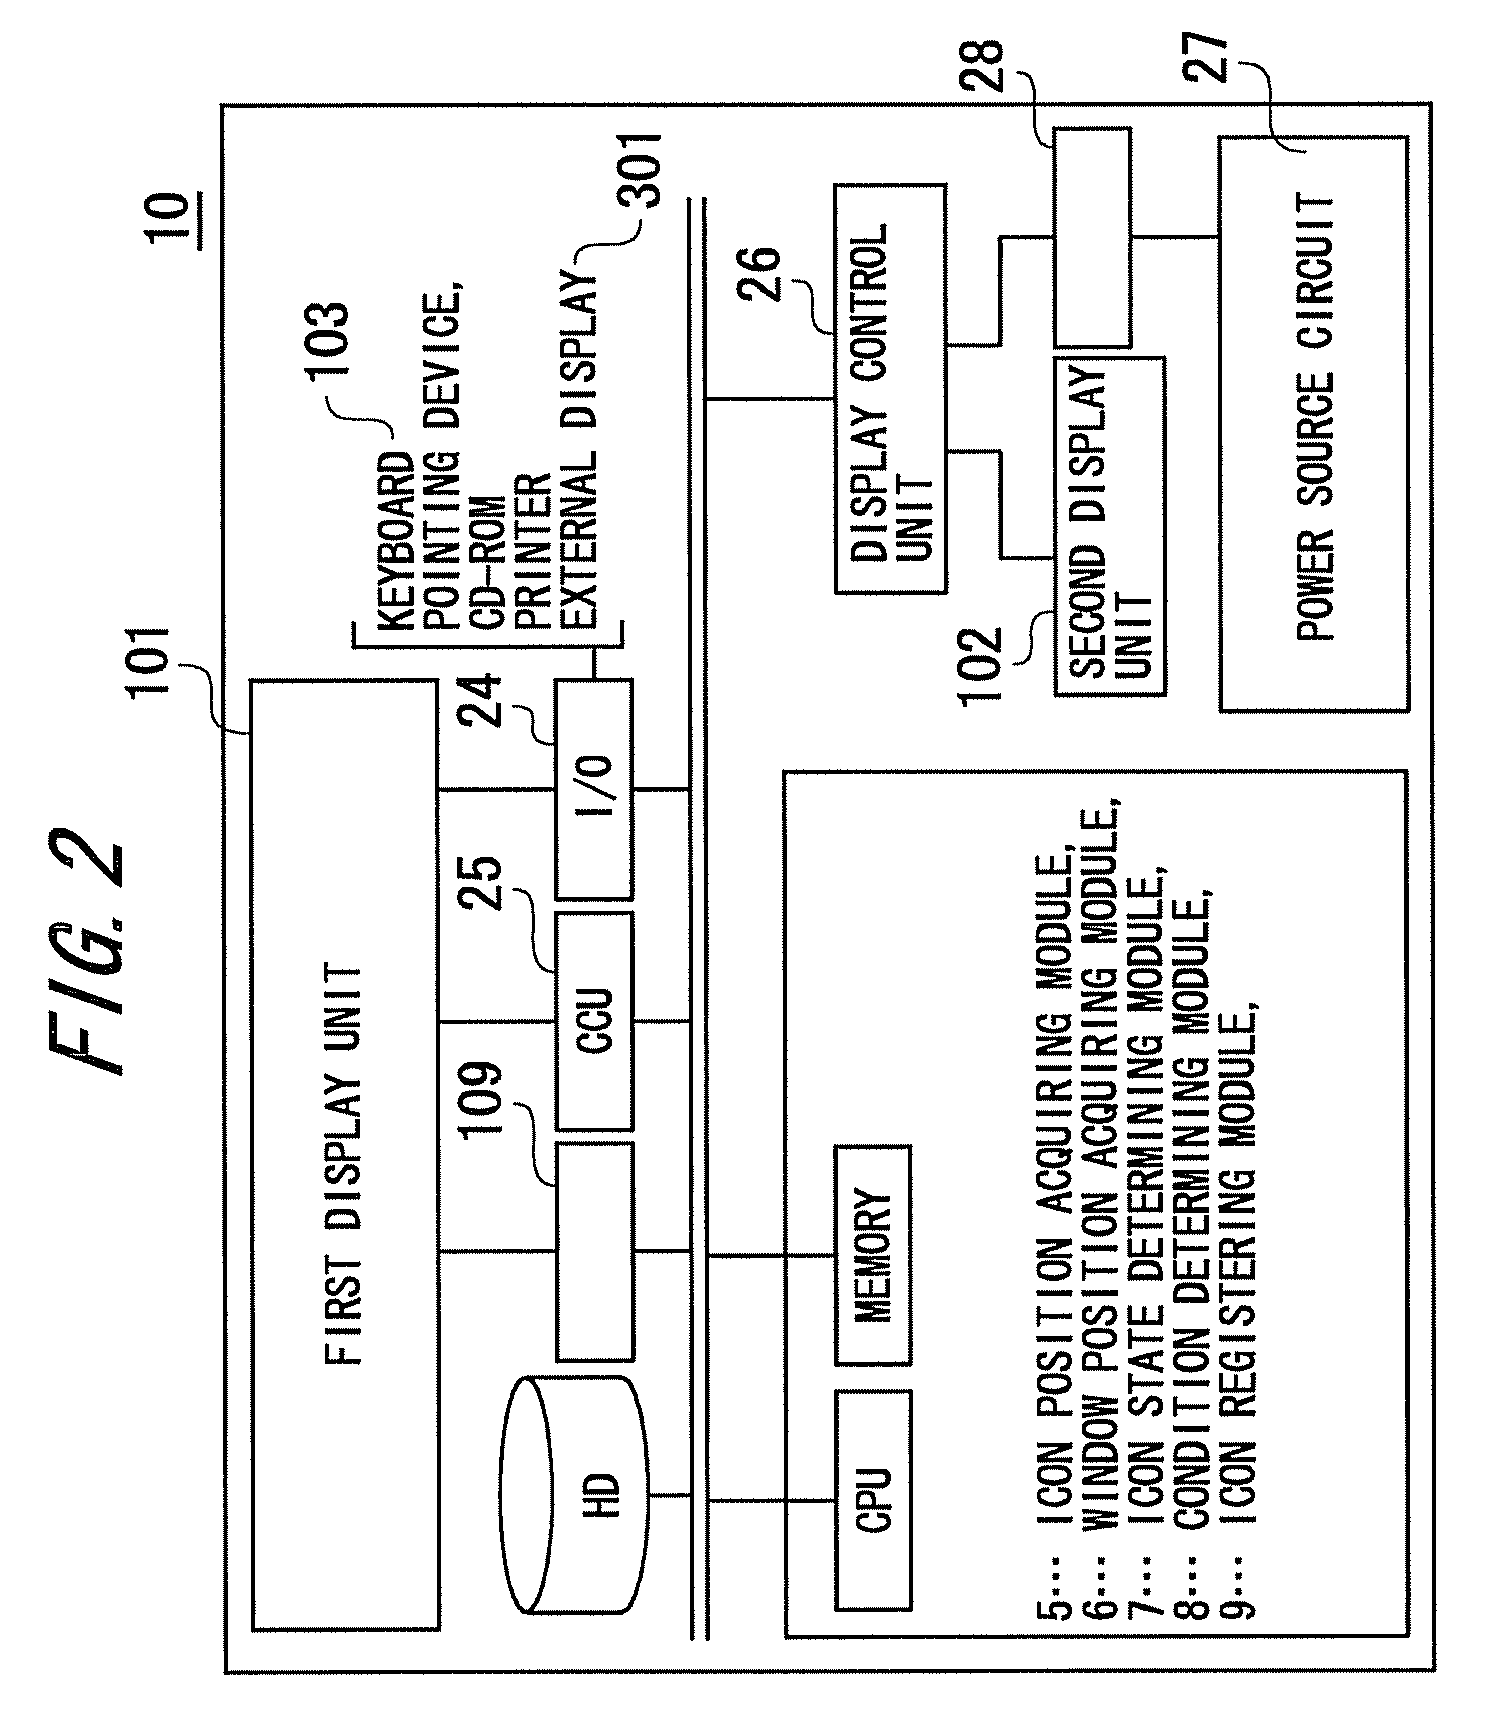 Electronic device and display method